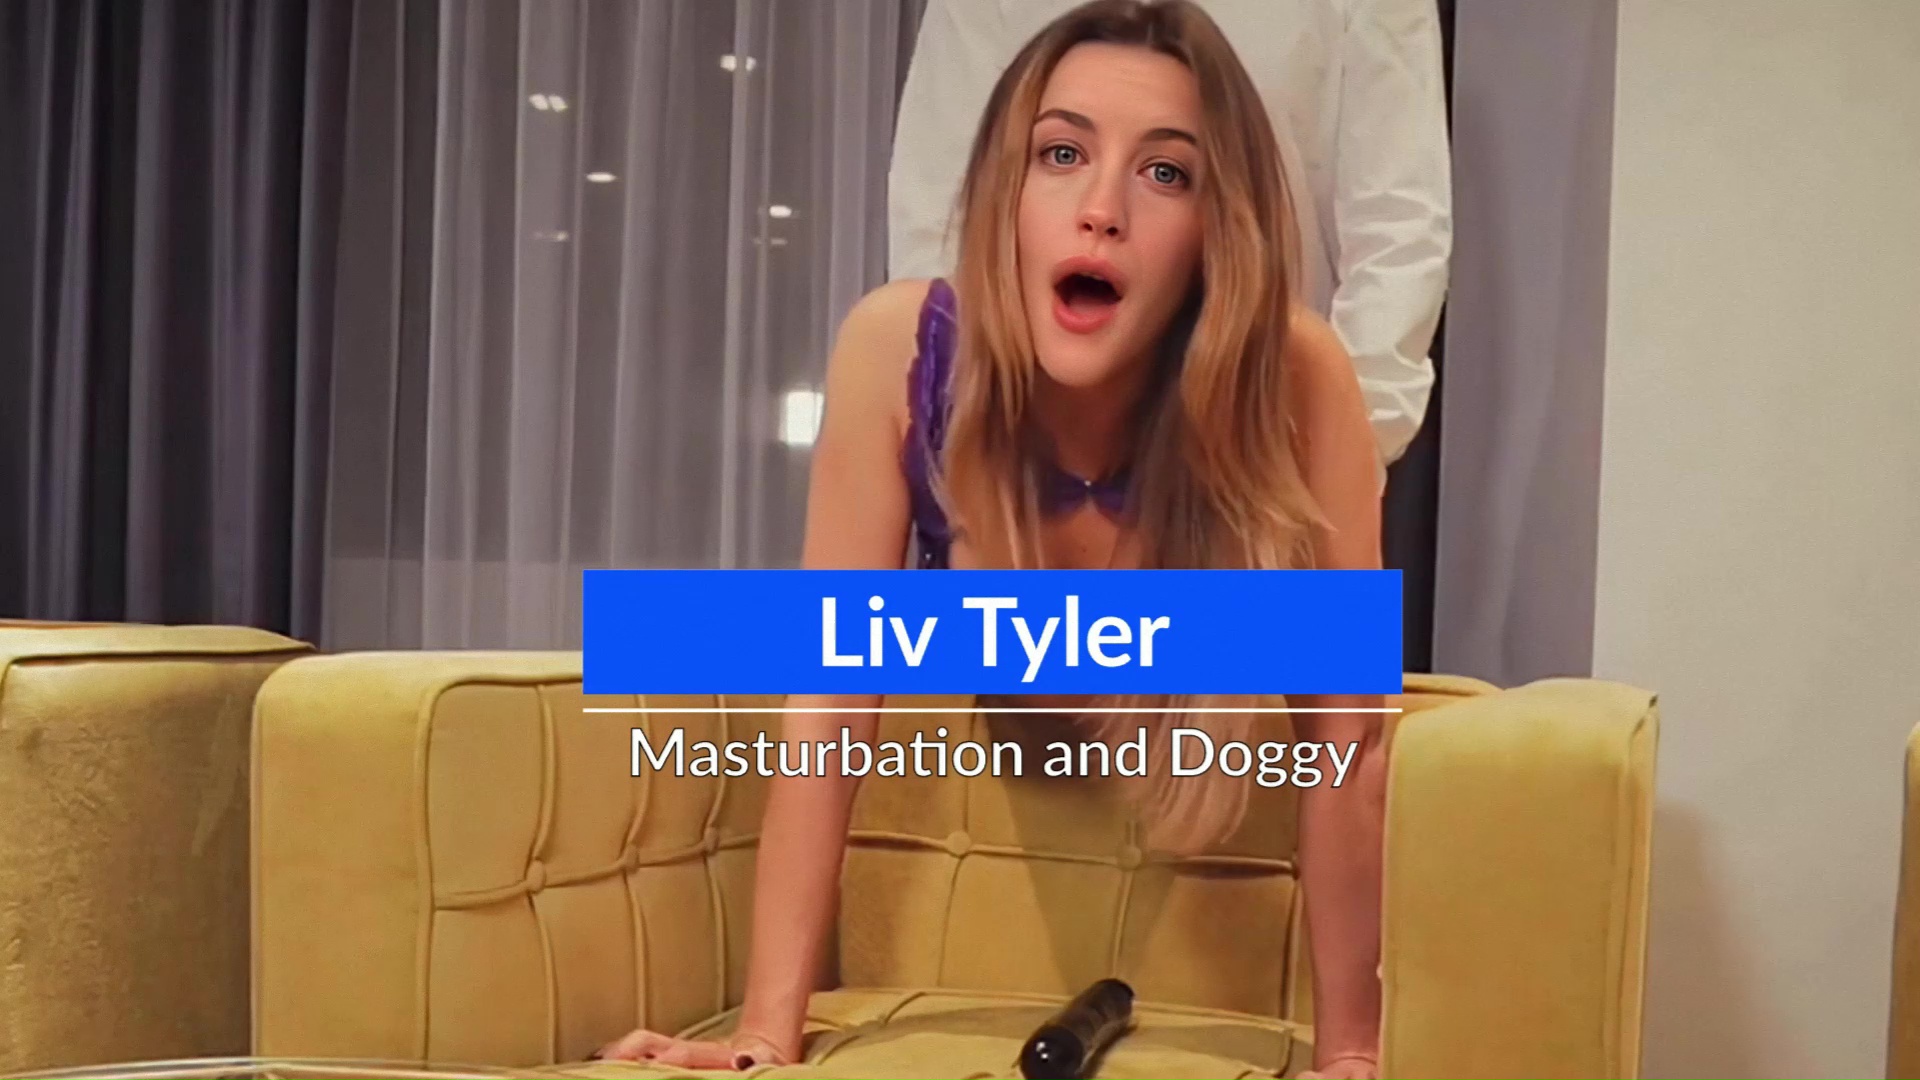 Liv Tyler - Masturbation and Doggy (Trailer - Full Video 11:32)